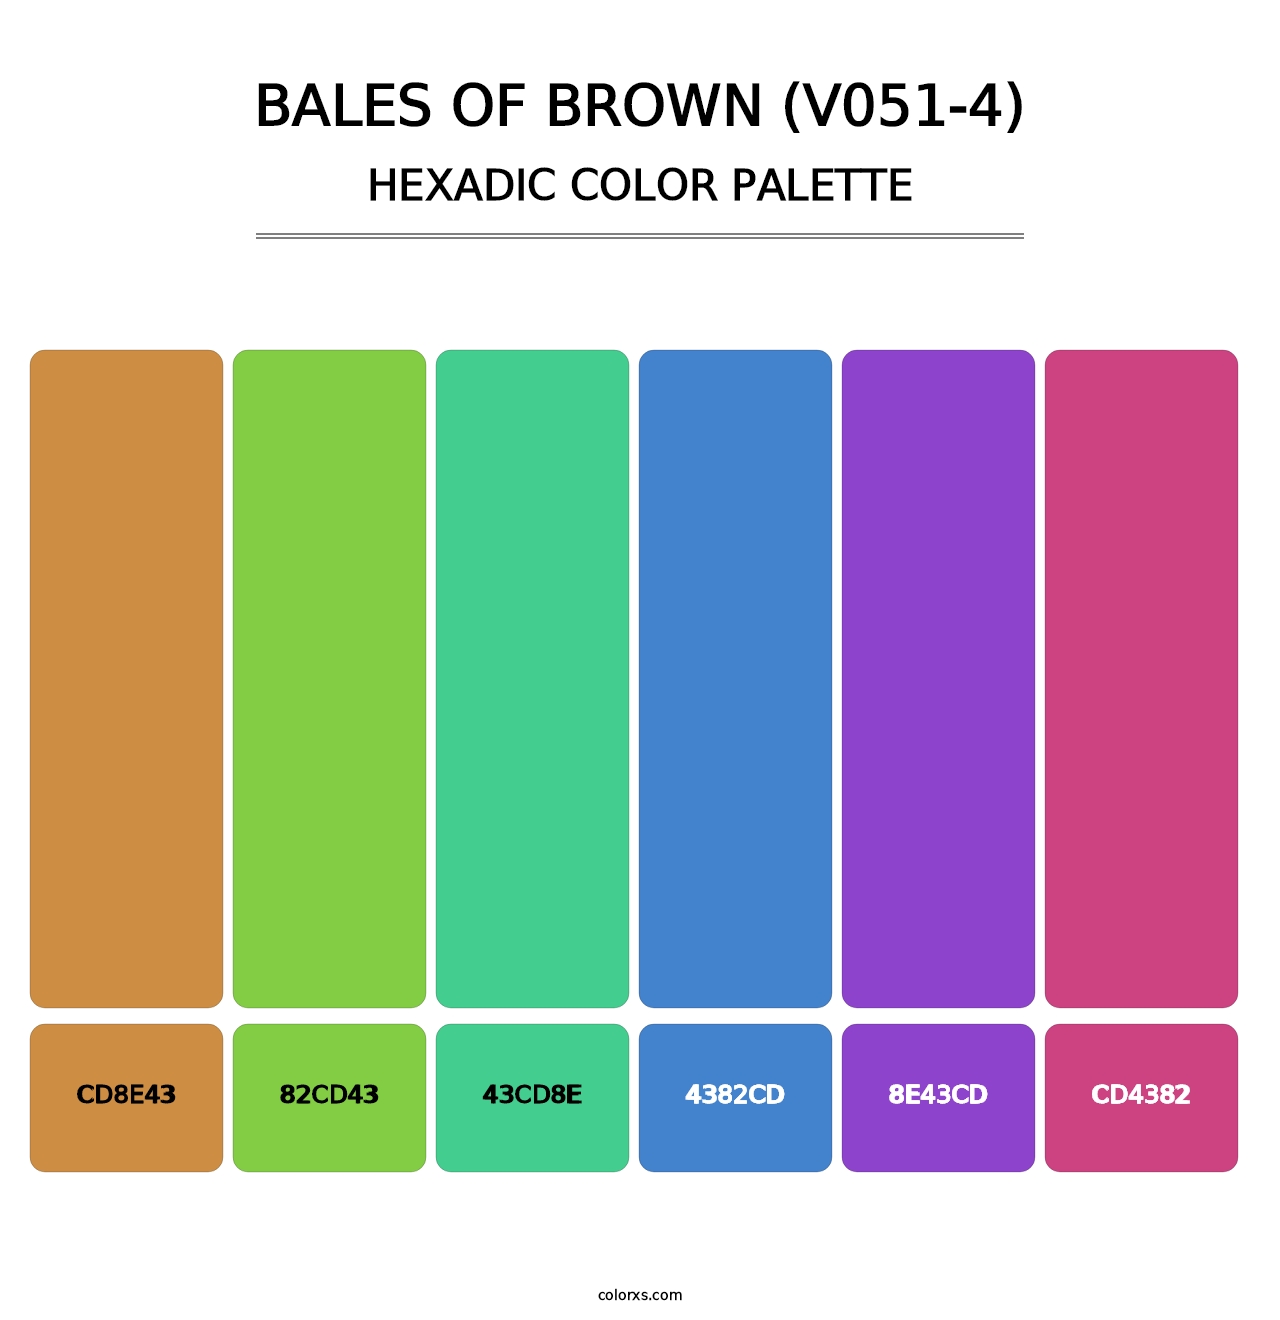 Bales of Brown (V051-4) - Hexadic Color Palette